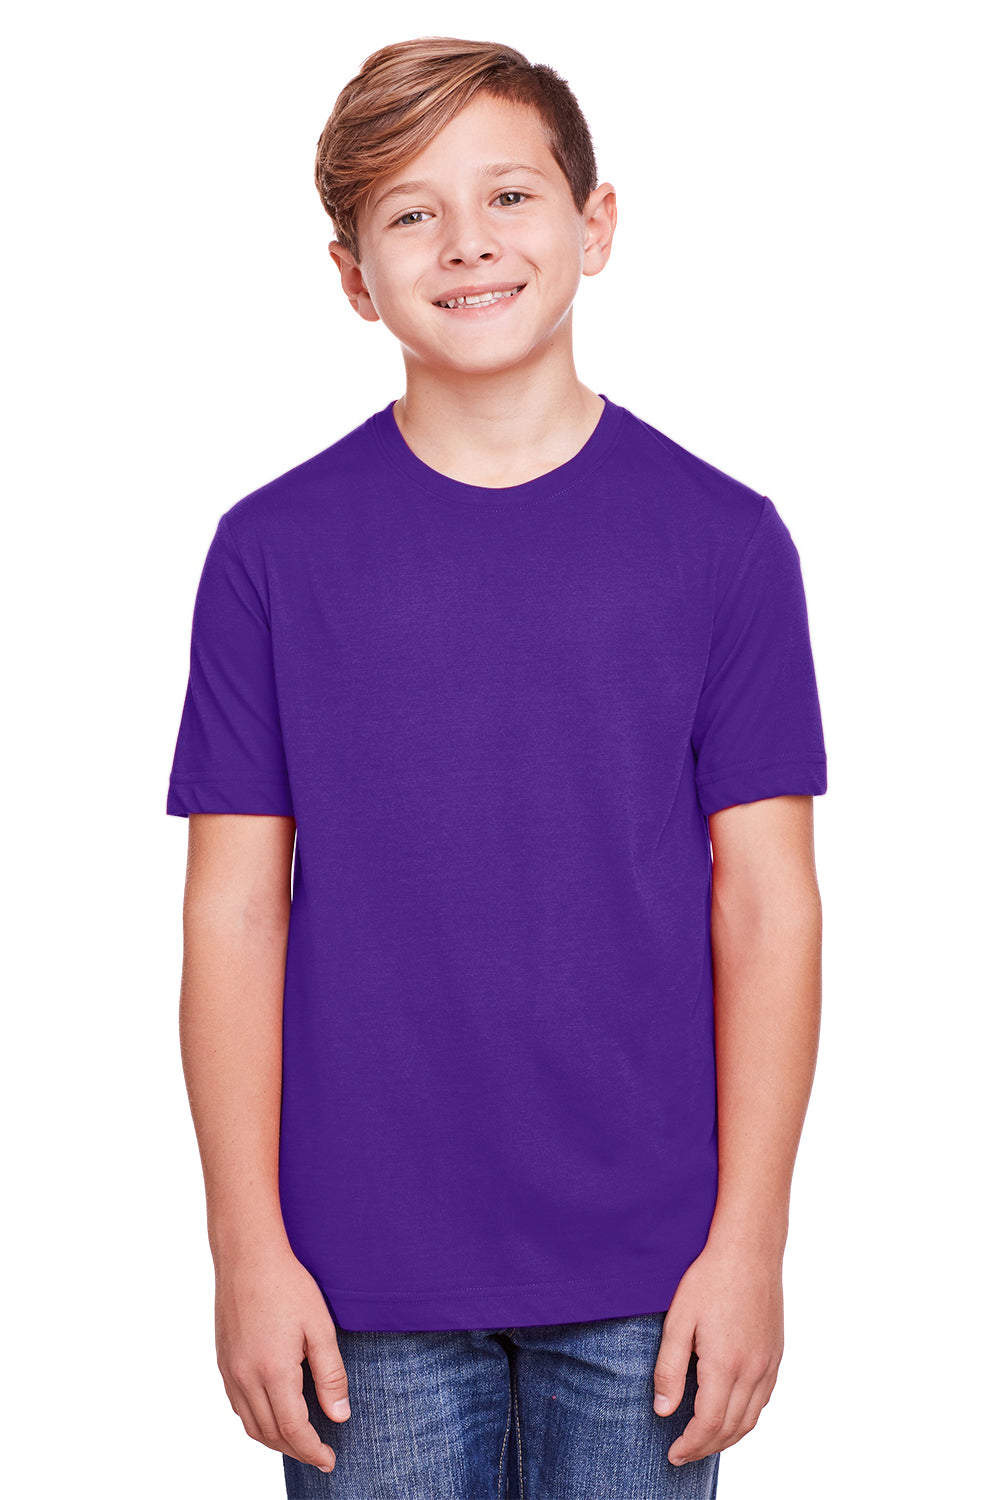 Core 365 CE111Y Youth Fusion ChromaSoft Performance Moisture Wicking Short Sleeve Crewneck T-Shirt Purple Front